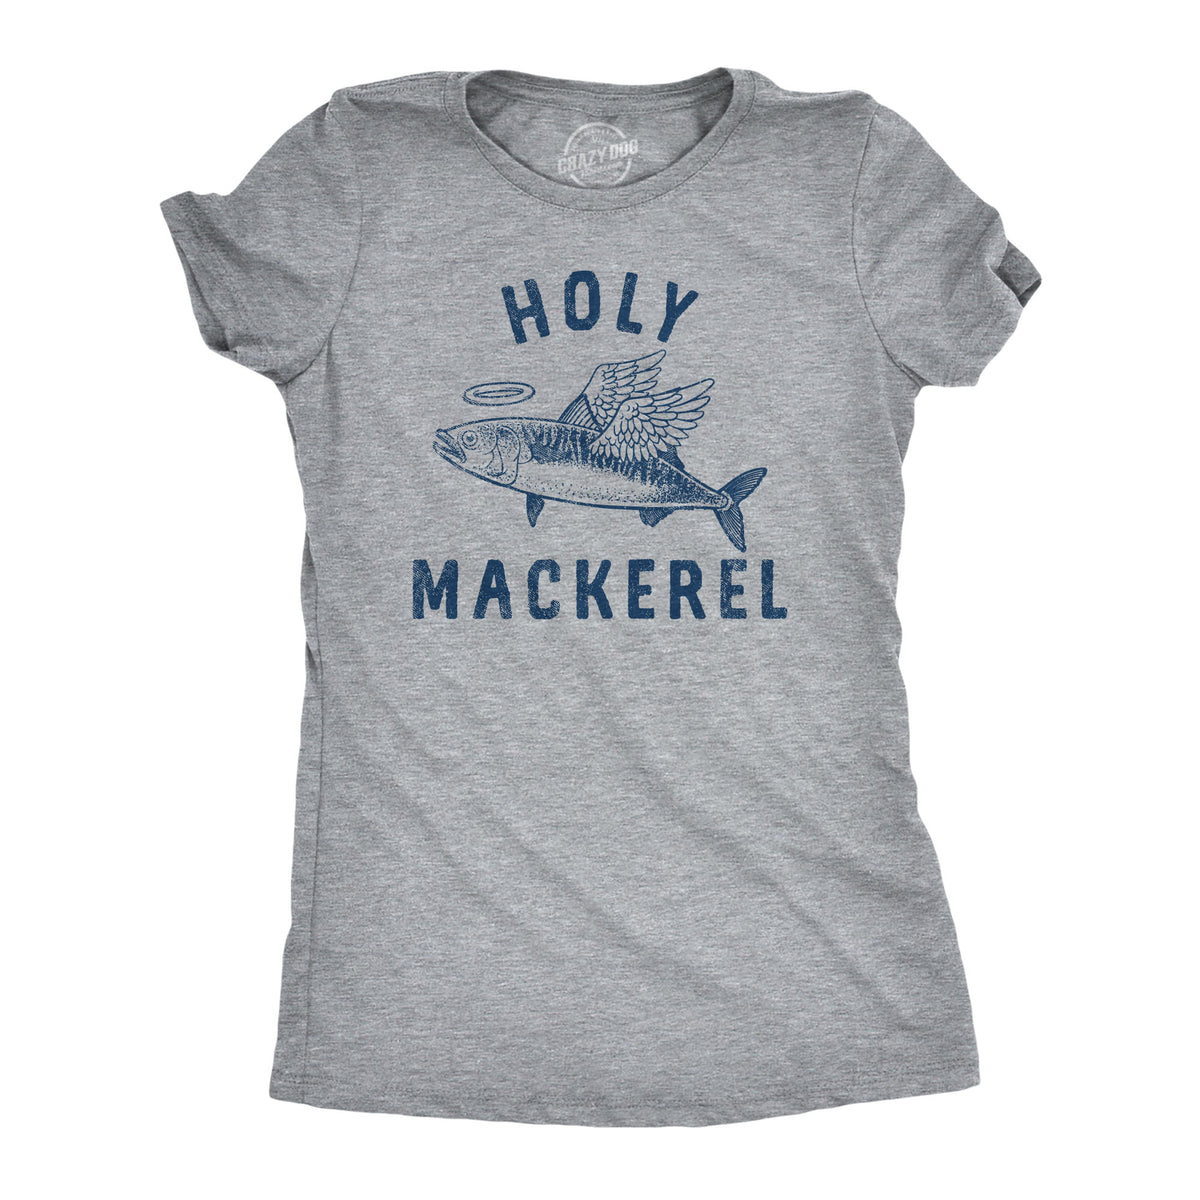 Funny Light Heather Grey - HOLY Holy Mackerel Womens T Shirt Nerdy Fishing sarcastic Tee